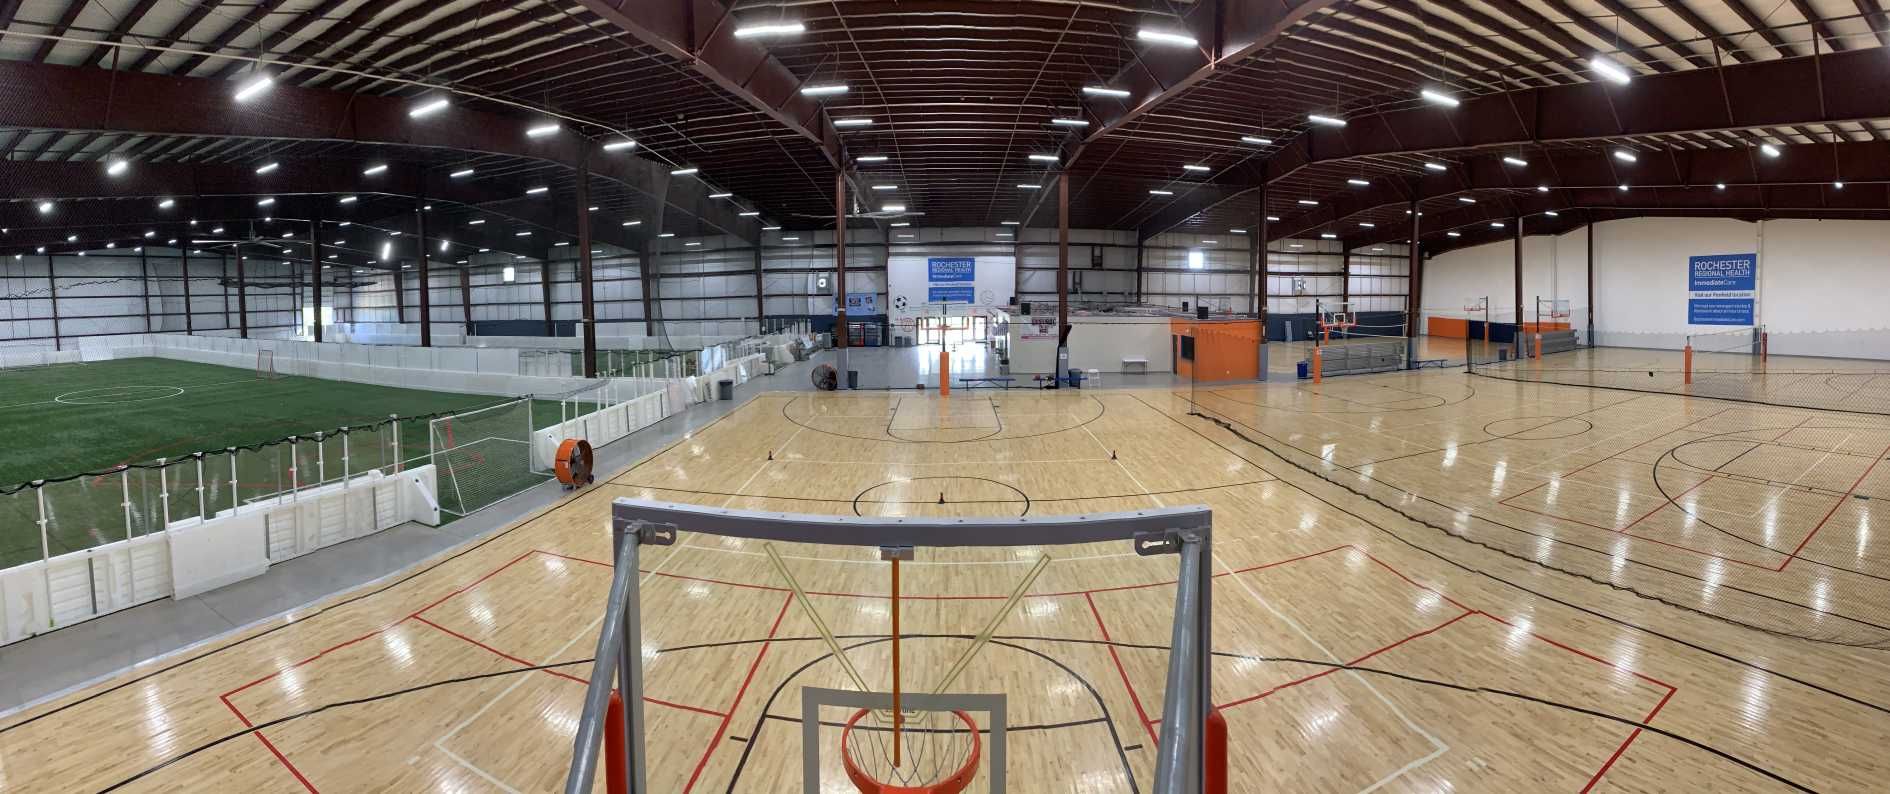 Tri-County Sports Complex - Multi Sport Indoor Facility in Rochester NY